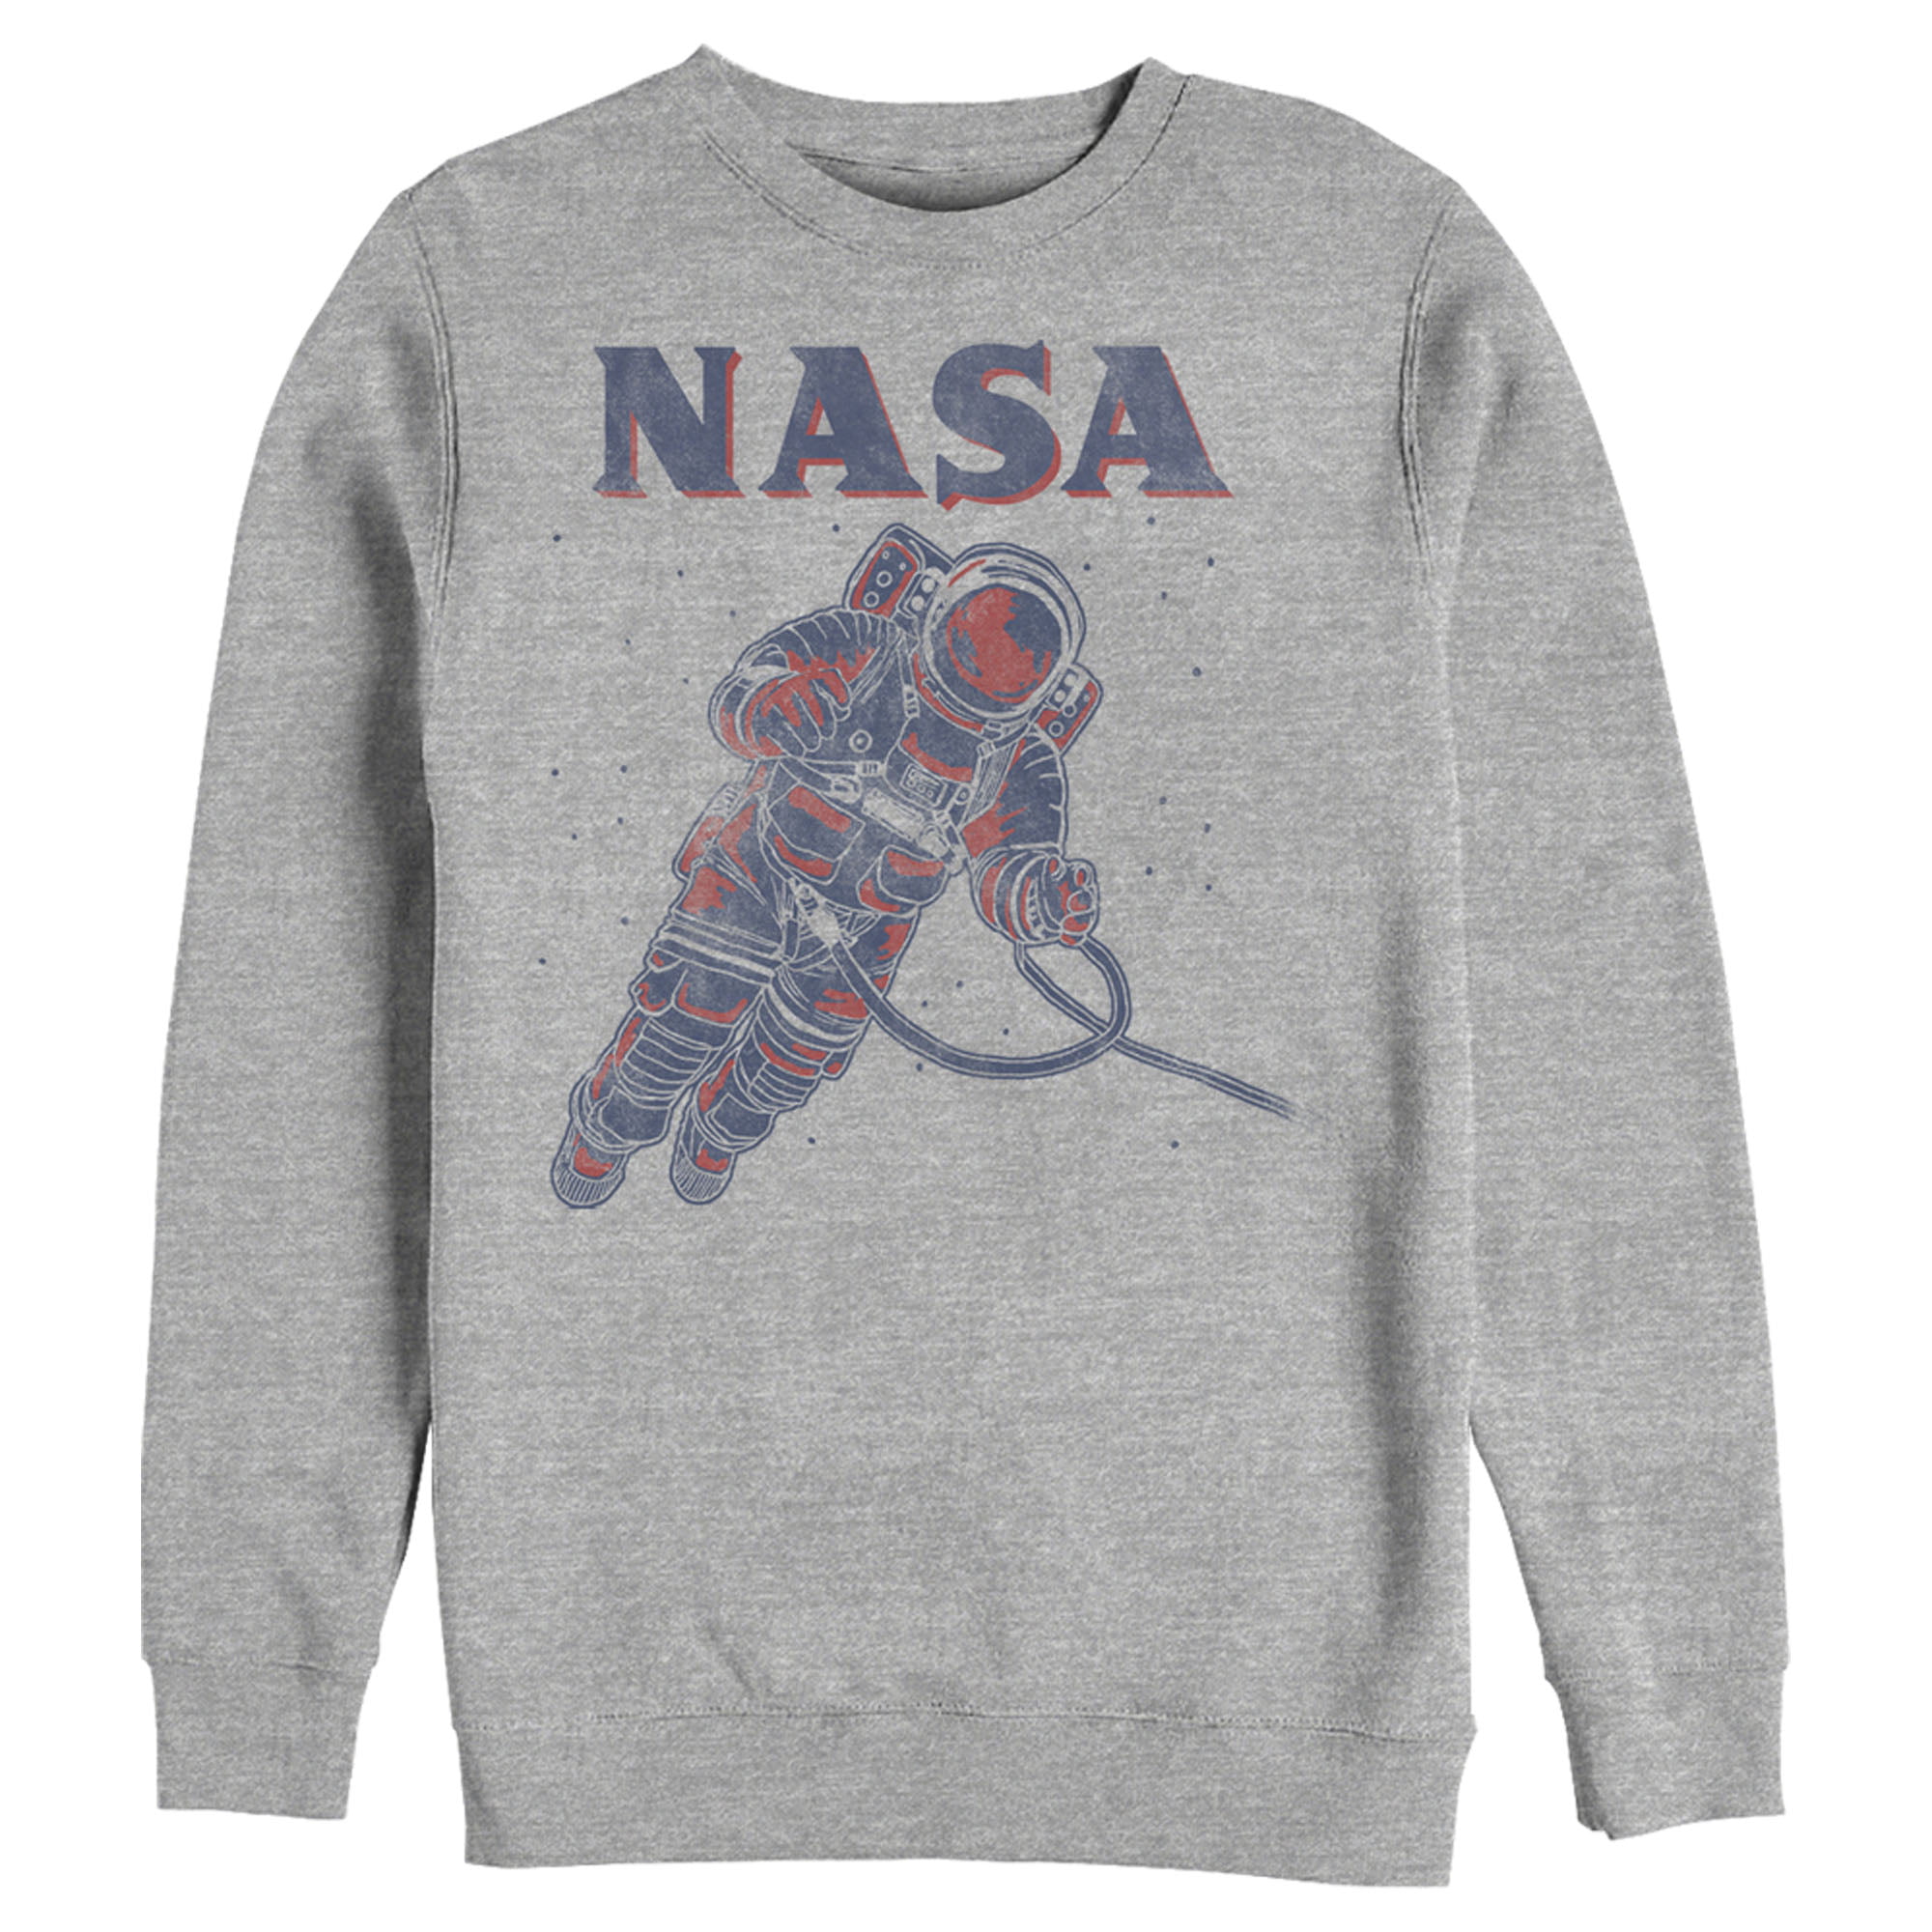 NasaNasa Space Astronaut to The Stars Kid's Sweatshirt 